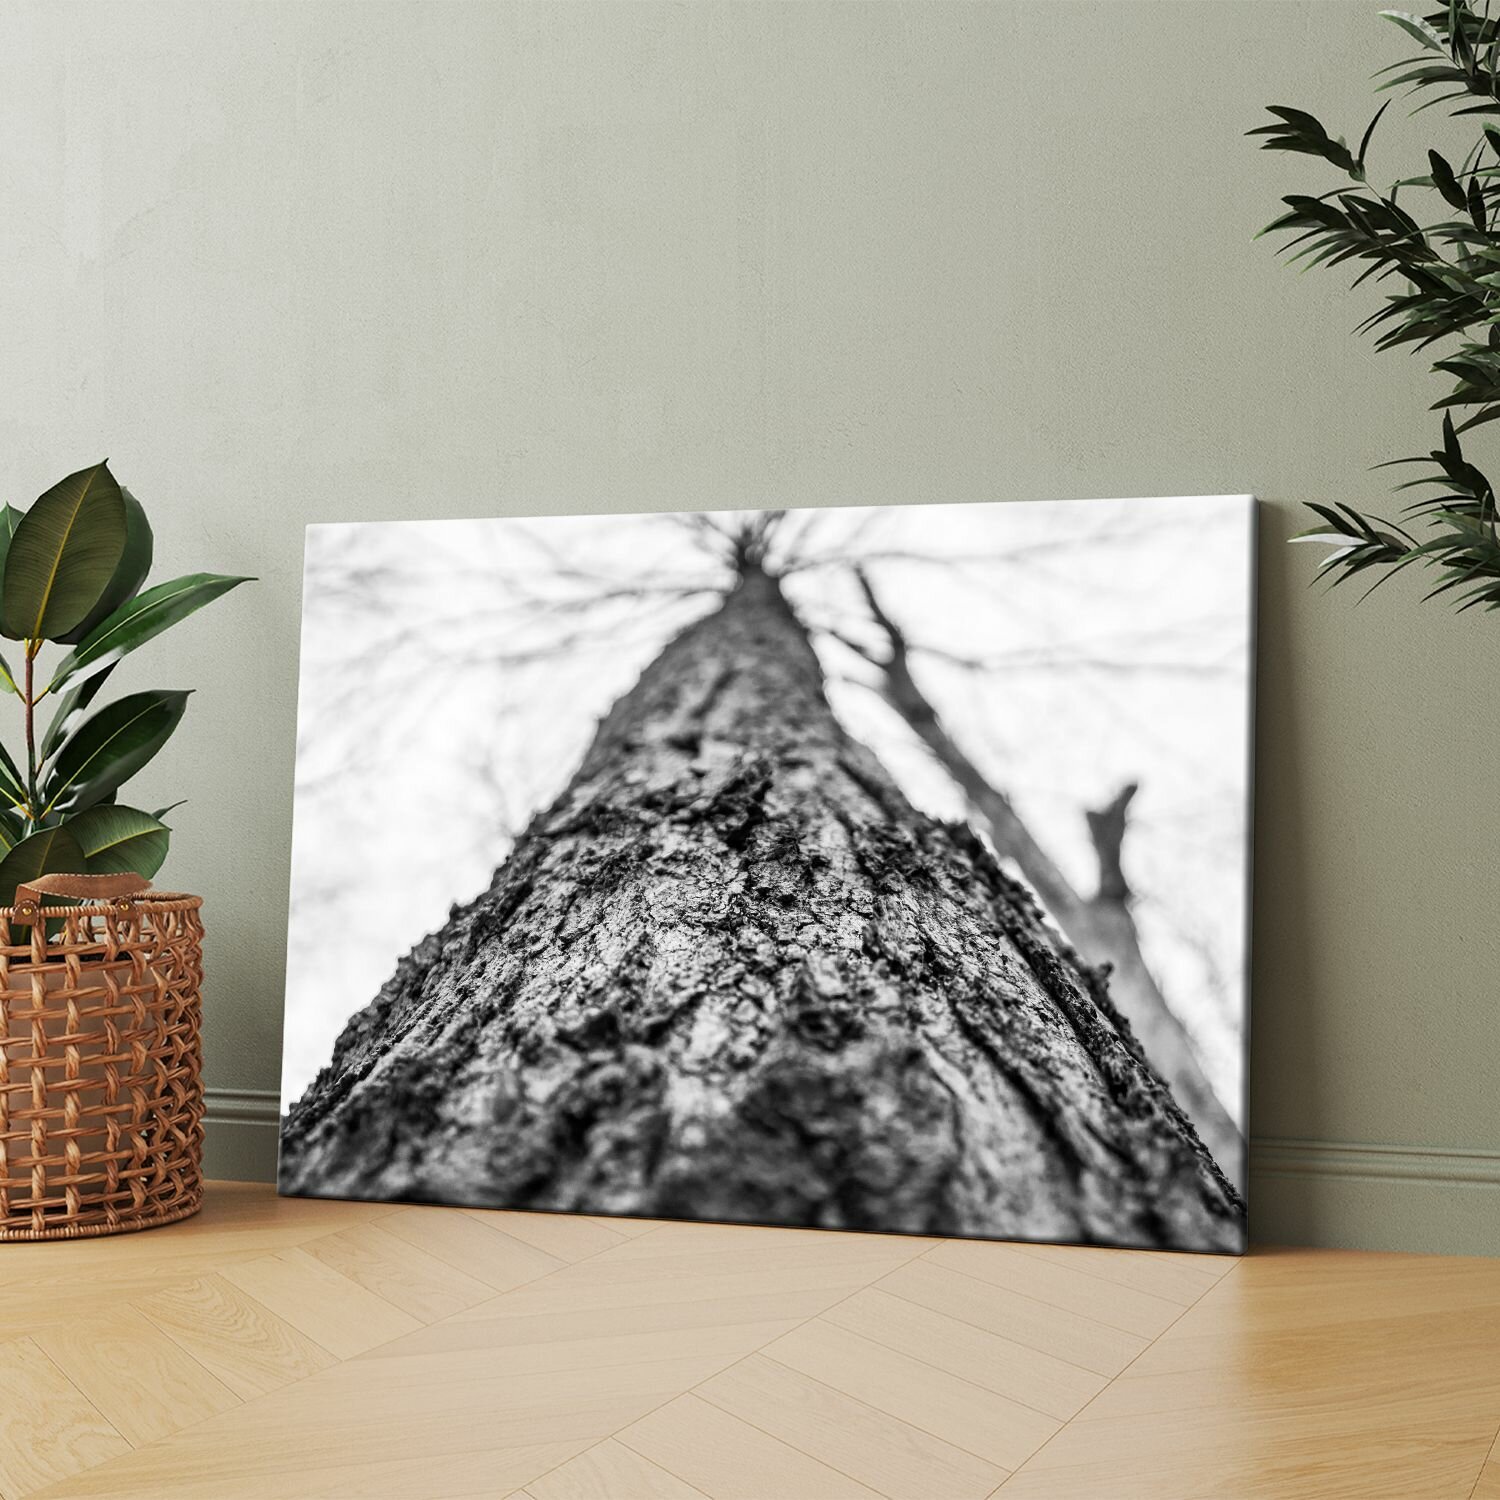 Картина на холсте (Черно-белое фото дерева) 30x40 см. Интерьерная, на стену.